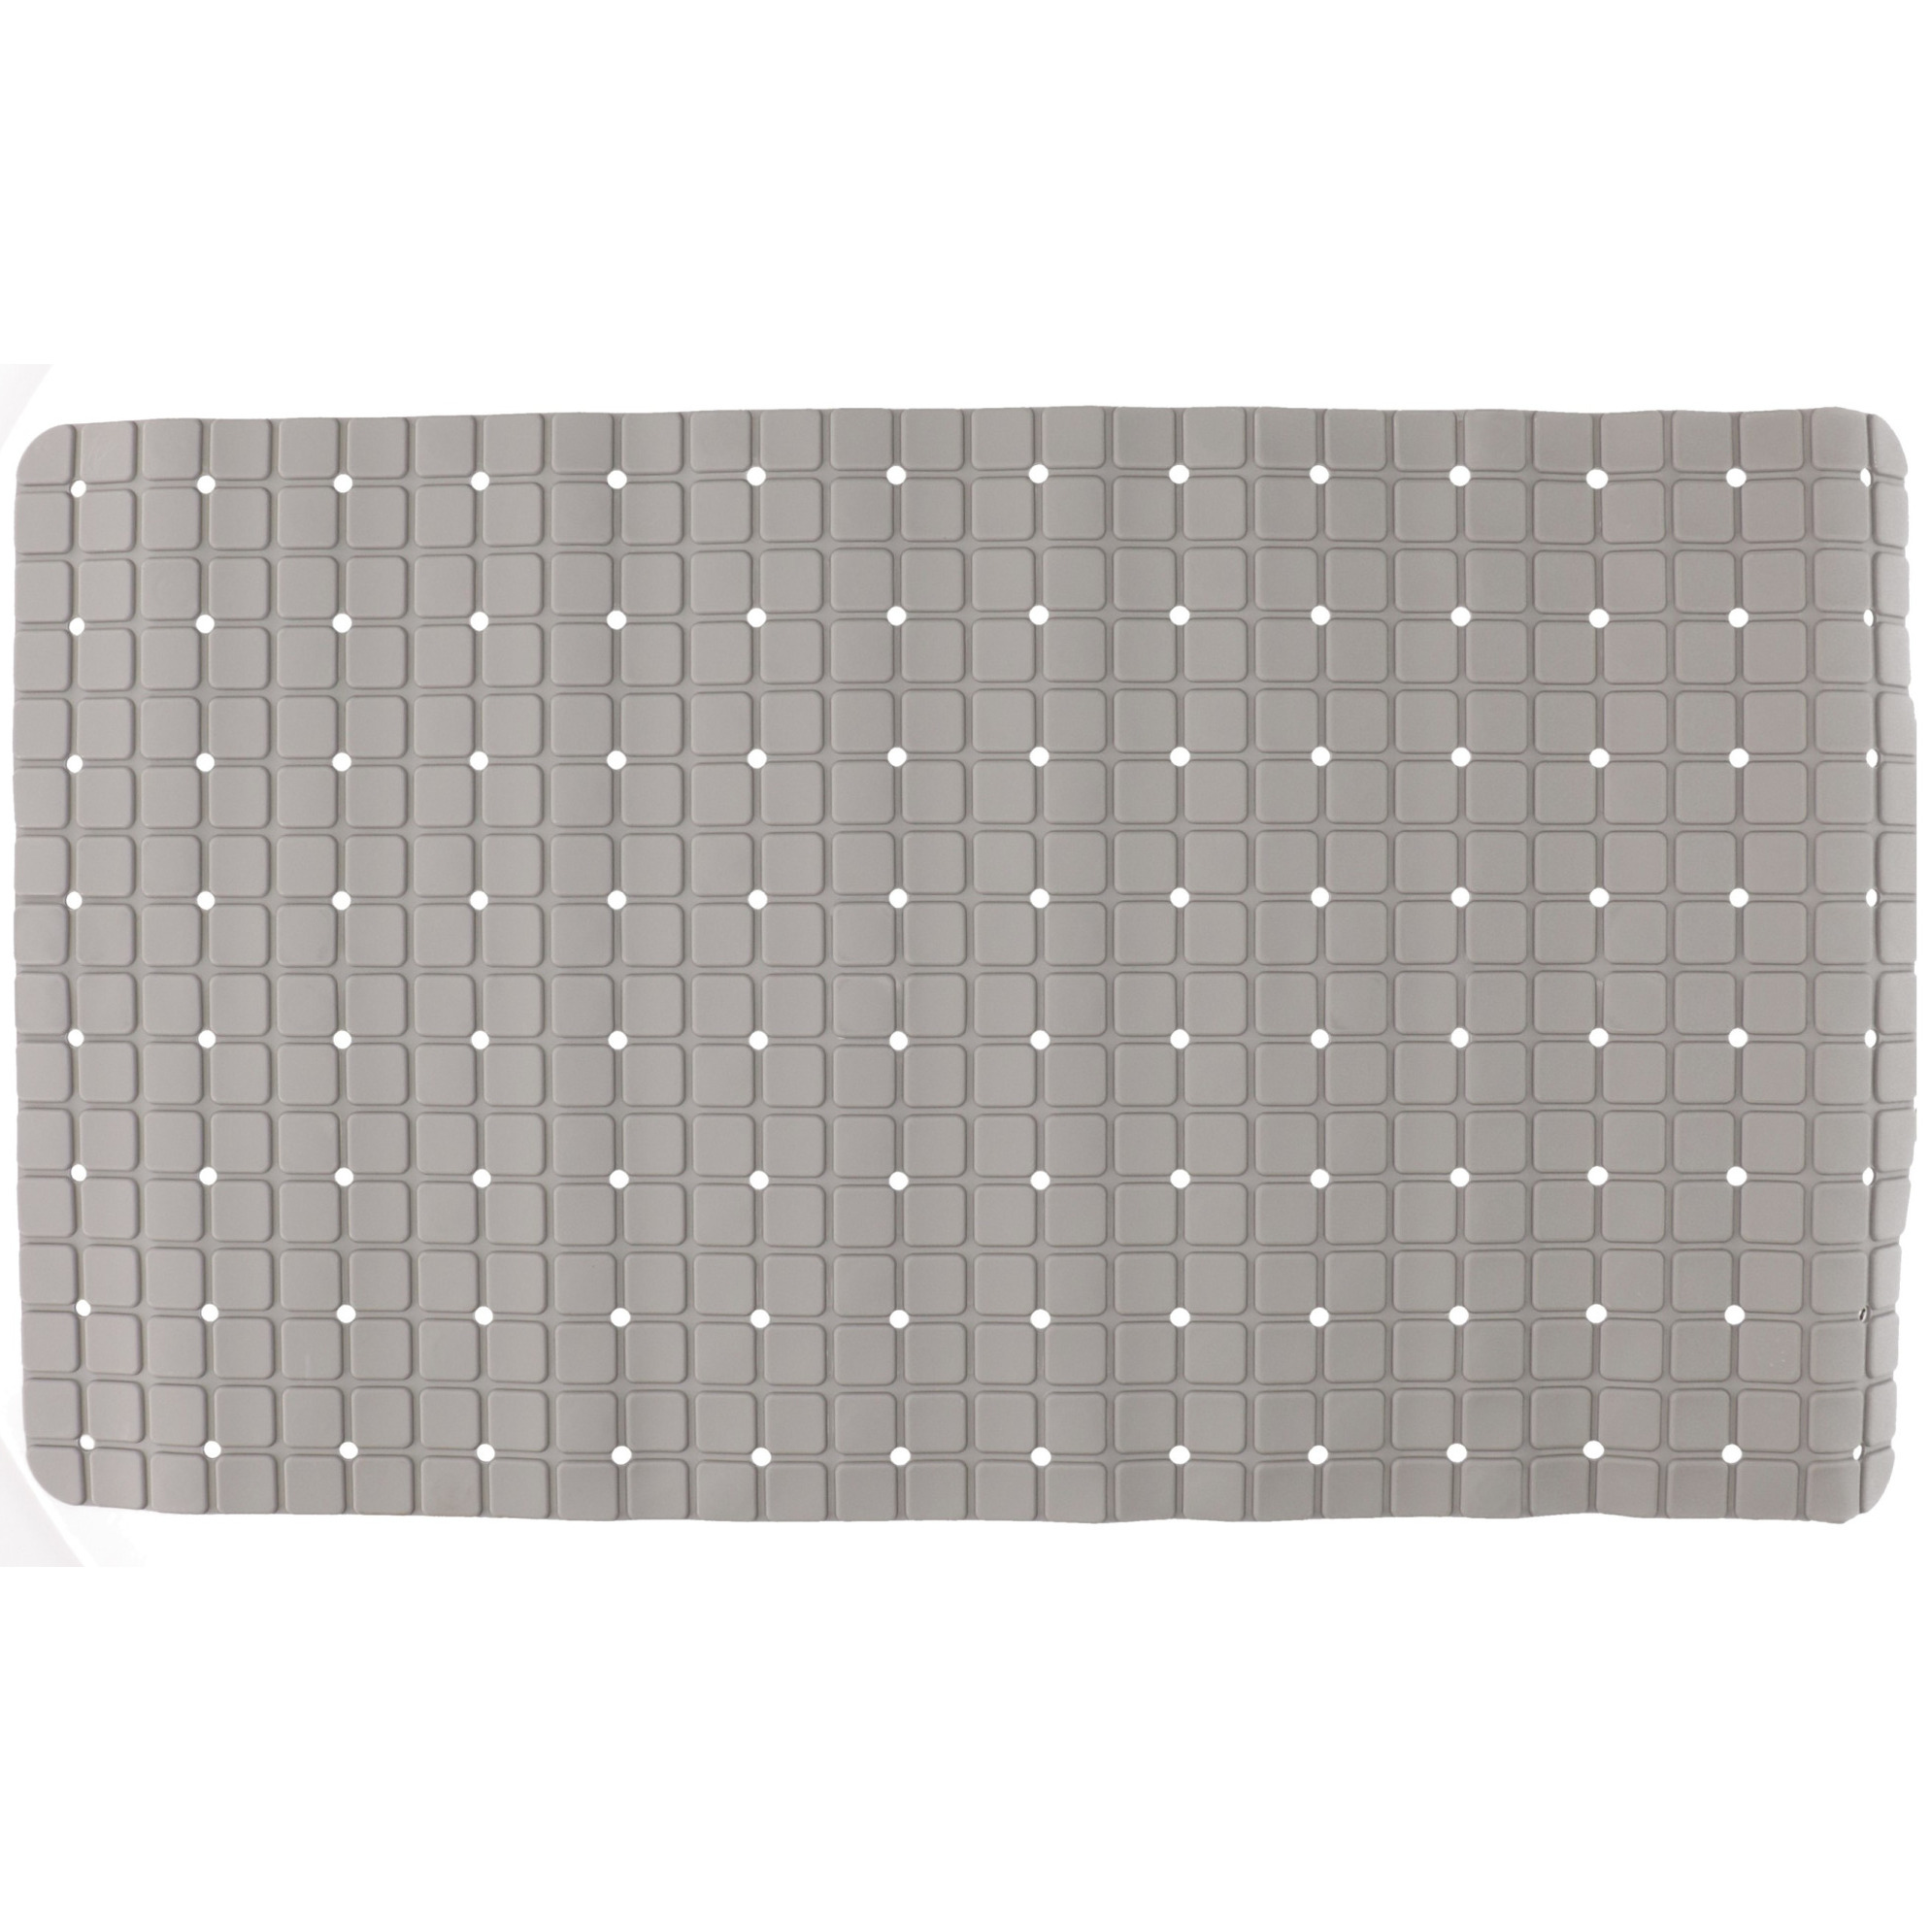 Badmat-douchemat anti-slip grijs vierkant patroon 69 x 39 cm